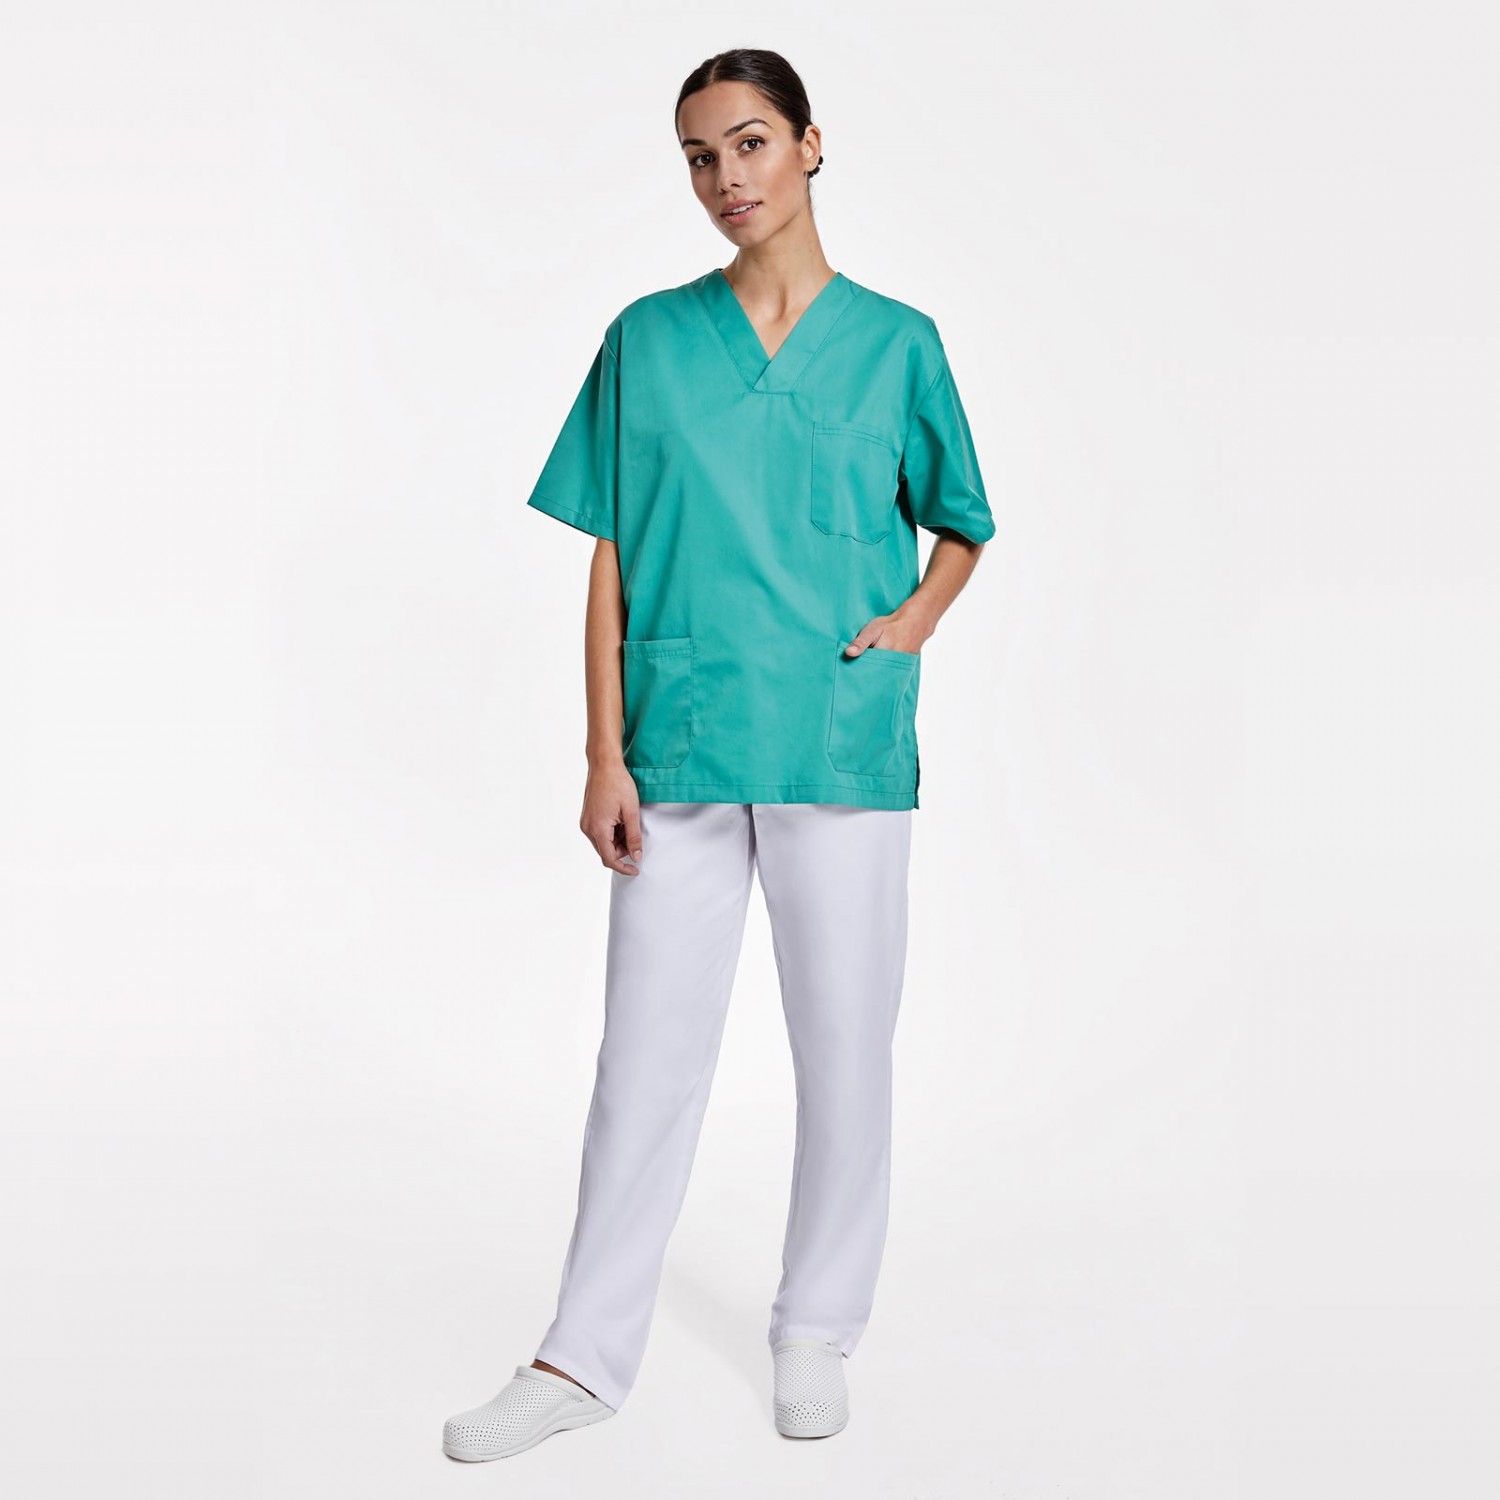 2. Foto Schlupfkasack Medizin Pflege Unisex Hemd Jacke (Farbe: OP-grün Größe:  XS)